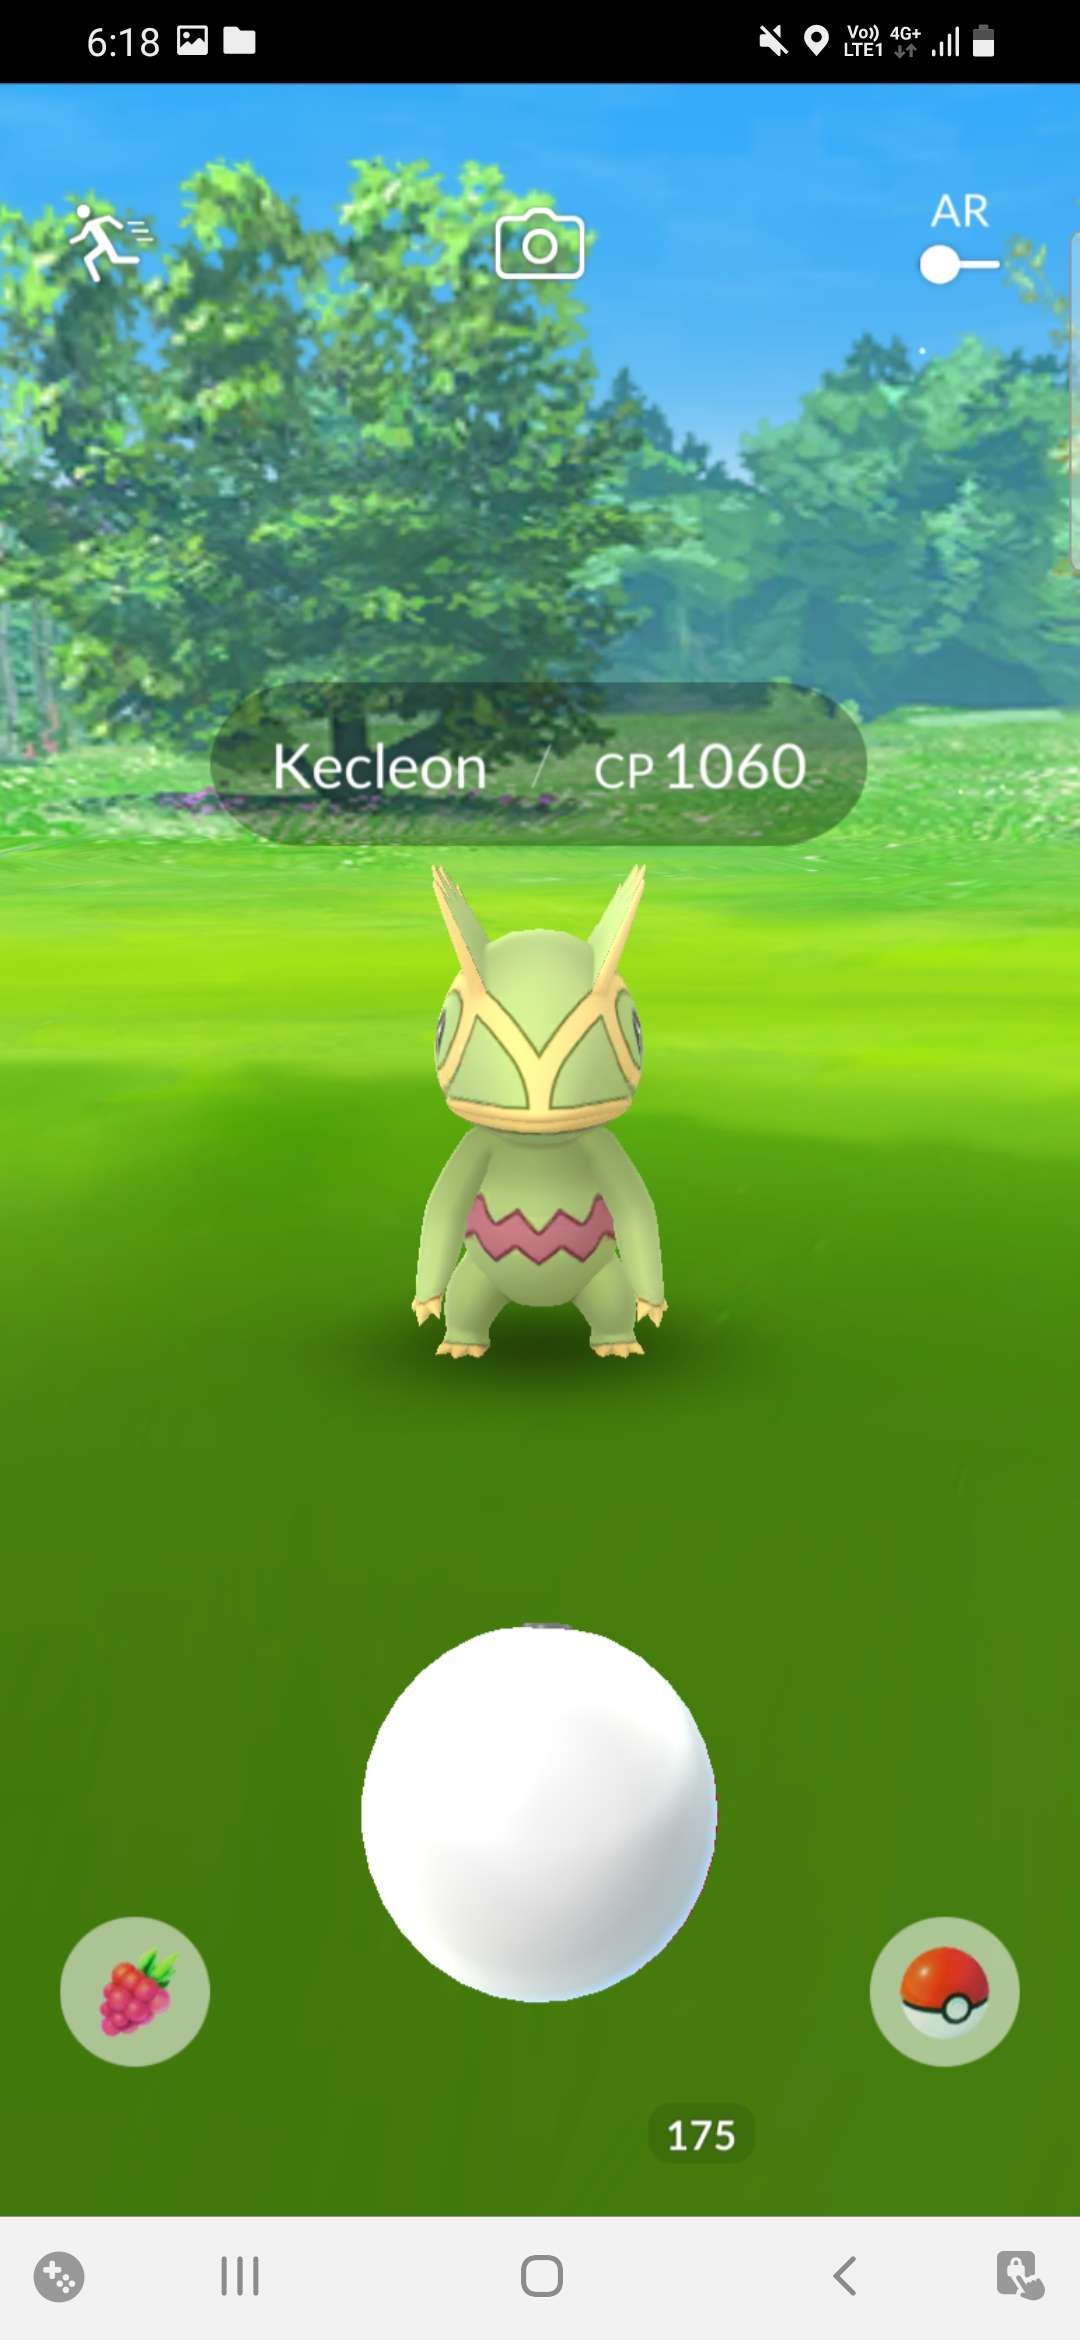 Kecleon staggers into Pokémon GO – here’s how to catch it!